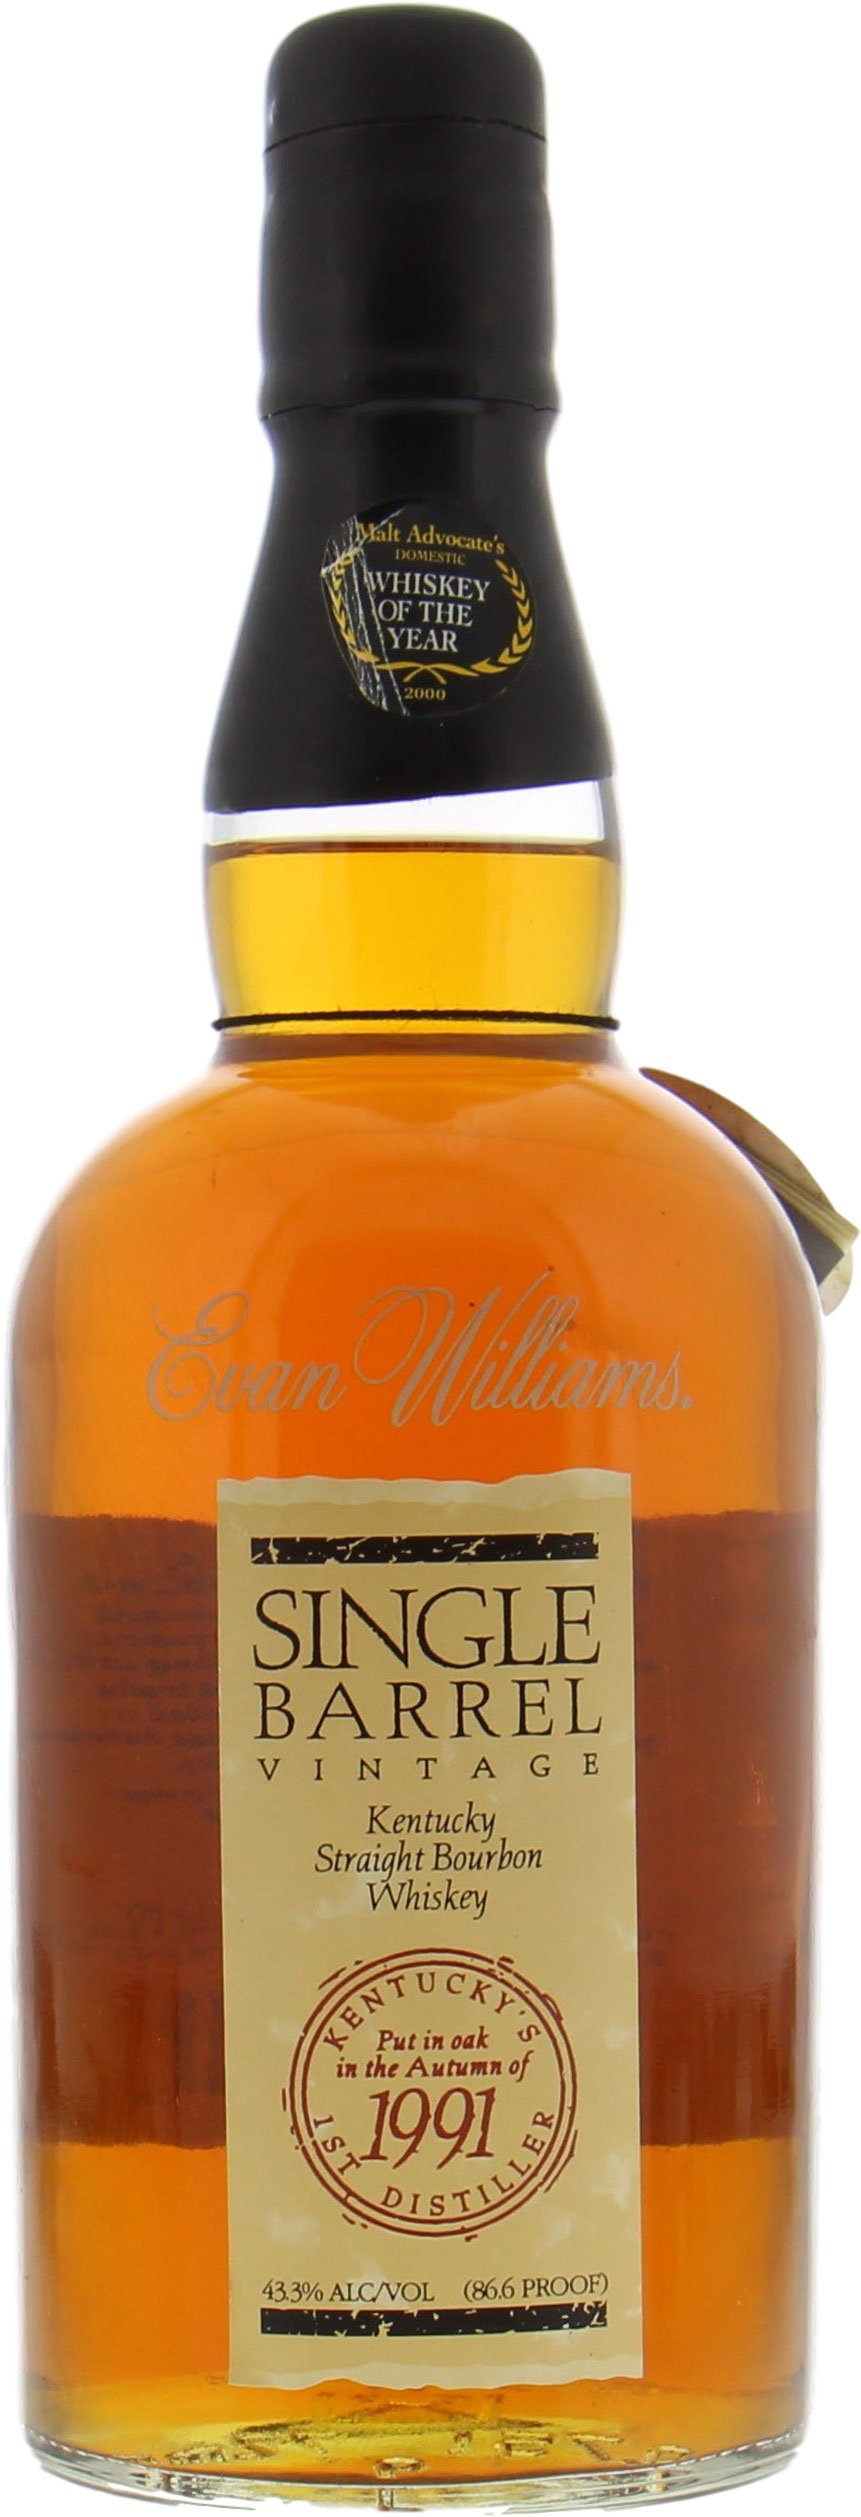 Olde Van Williams - Evan Williams 1991 Single Barrel Vintage Cask 51 43.3% 1991 Perfect